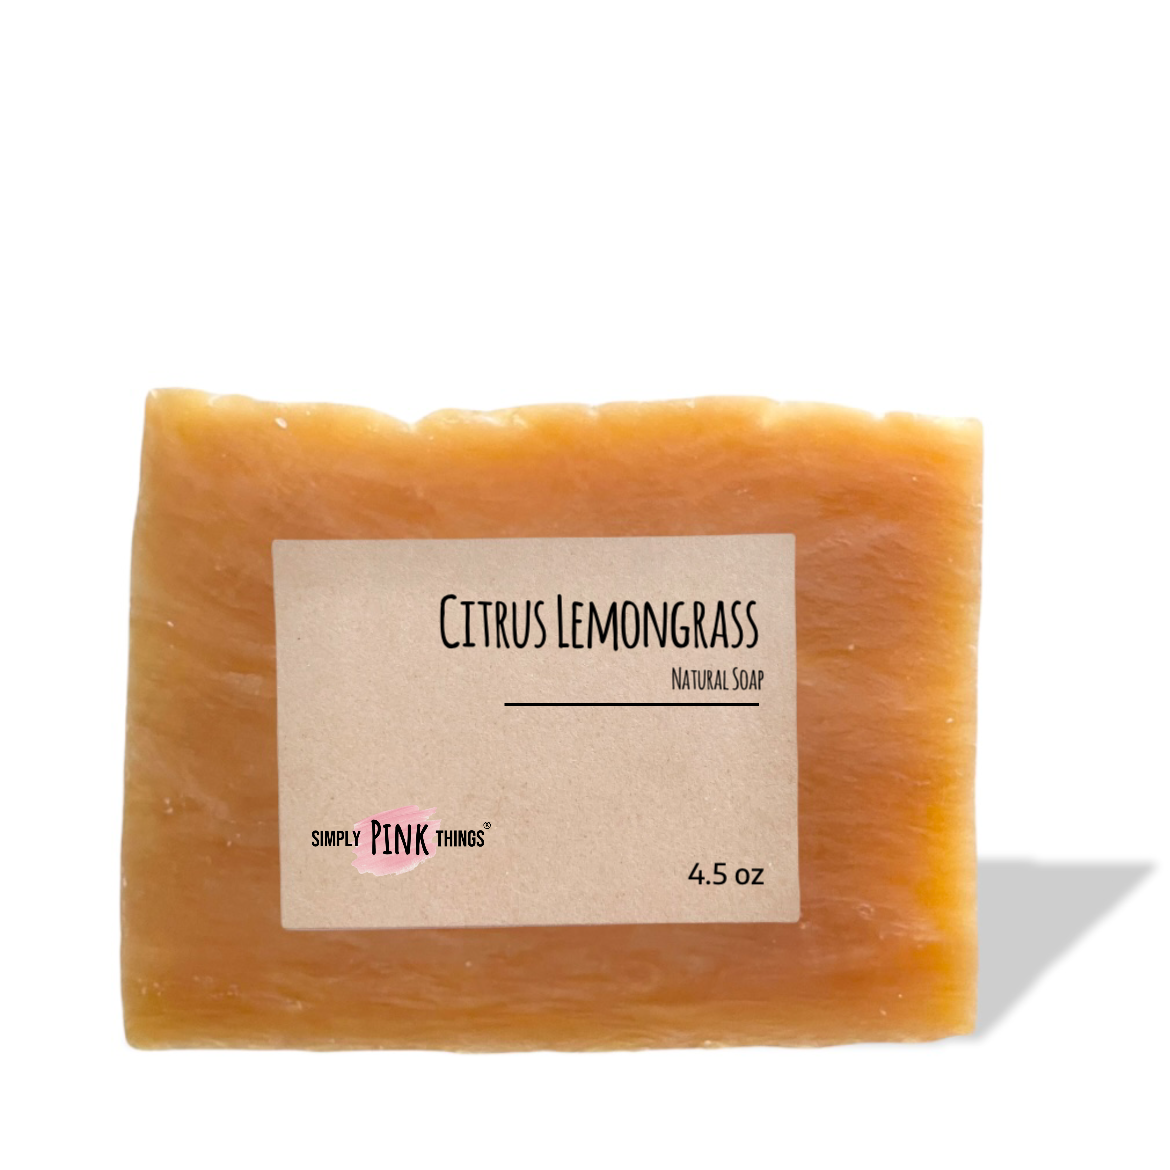 Citrus Lemongrass Natural Soap (4.5 oz.)